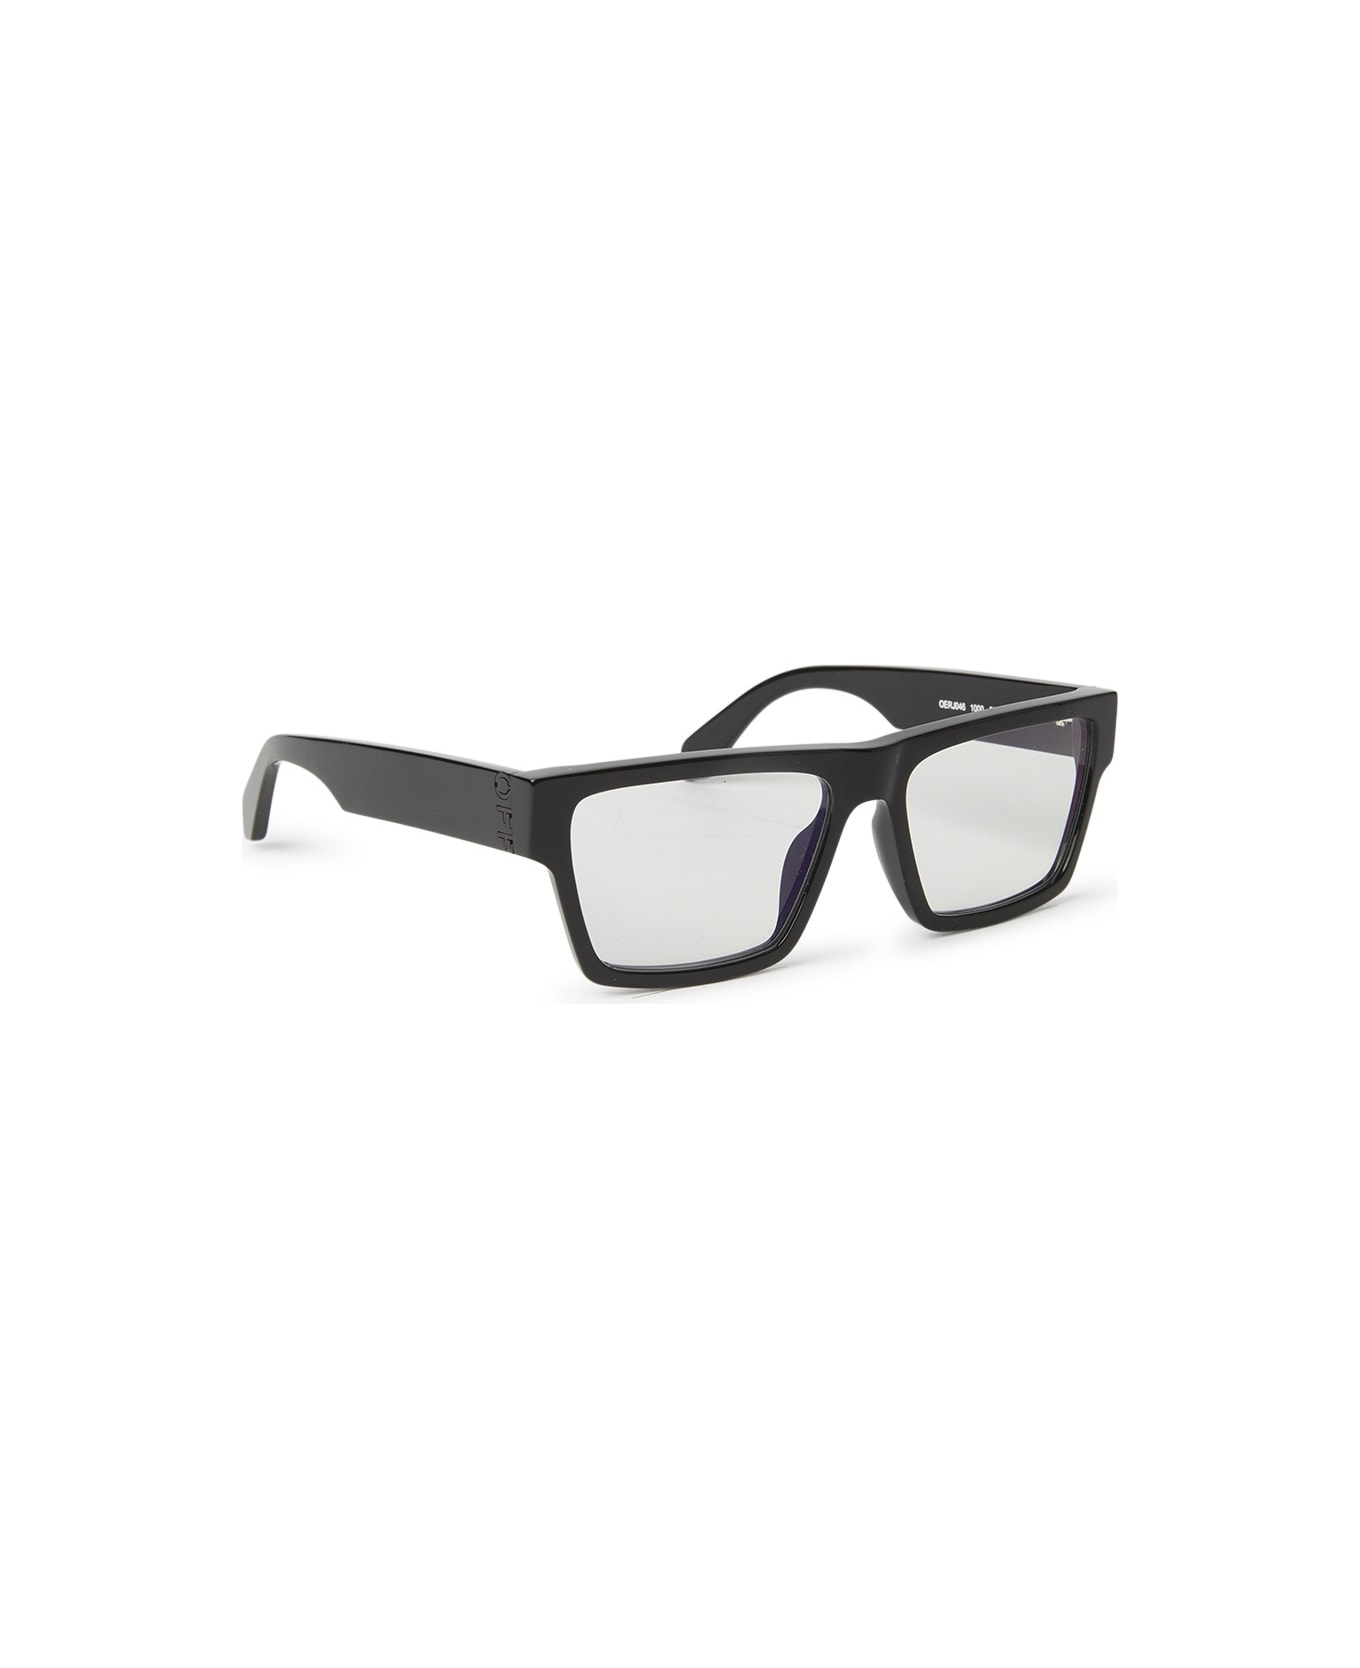 Off-White OERJ046 STYLE 46 Eyewear - Black